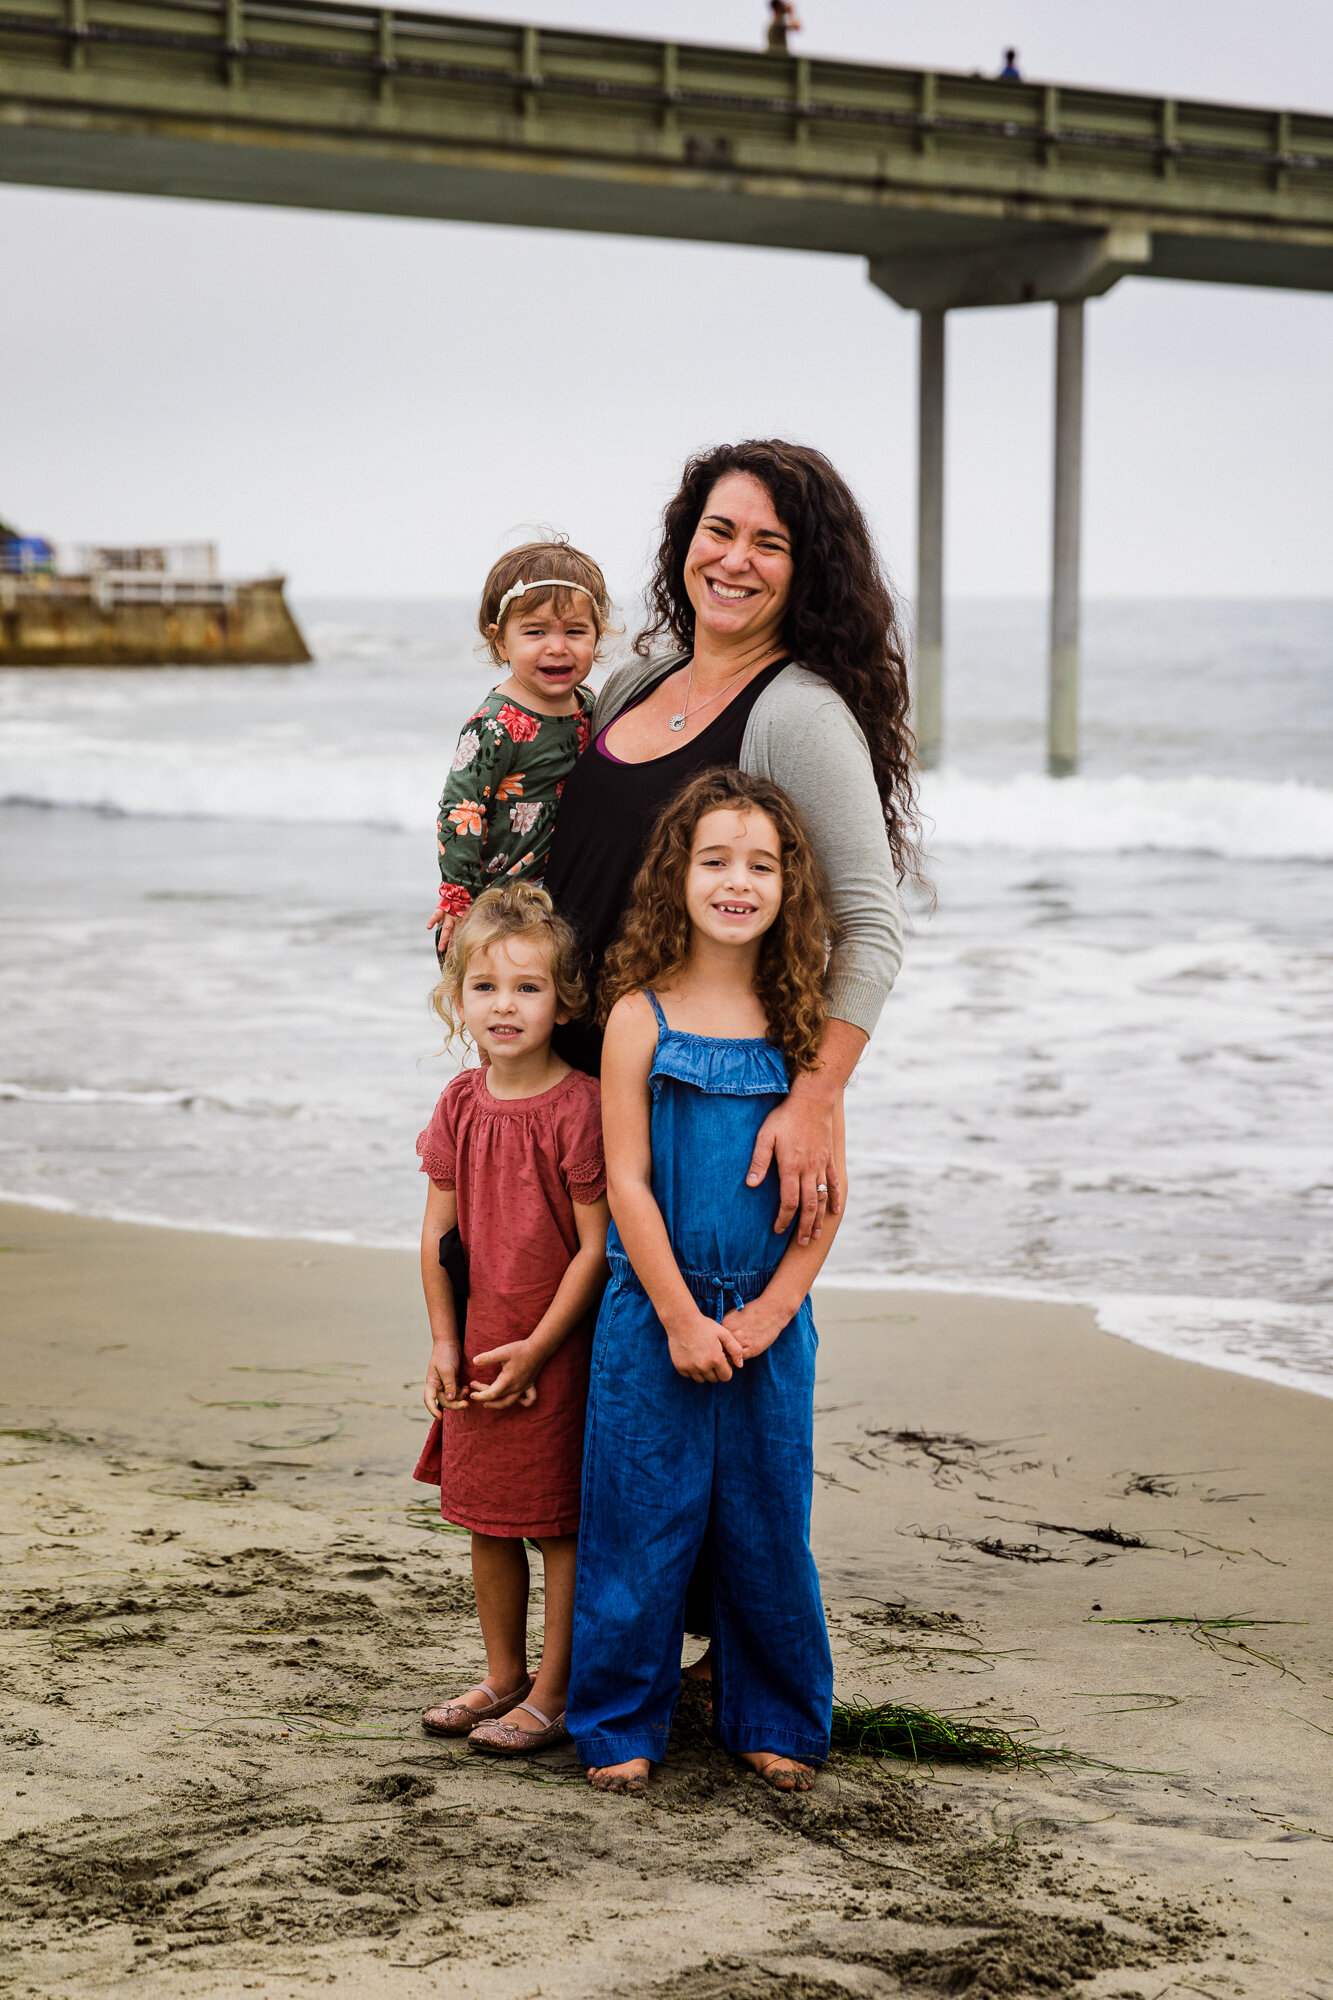 Family Portrait Photography Session at Ocean Beach Pier, San Diego, California-61.jpg